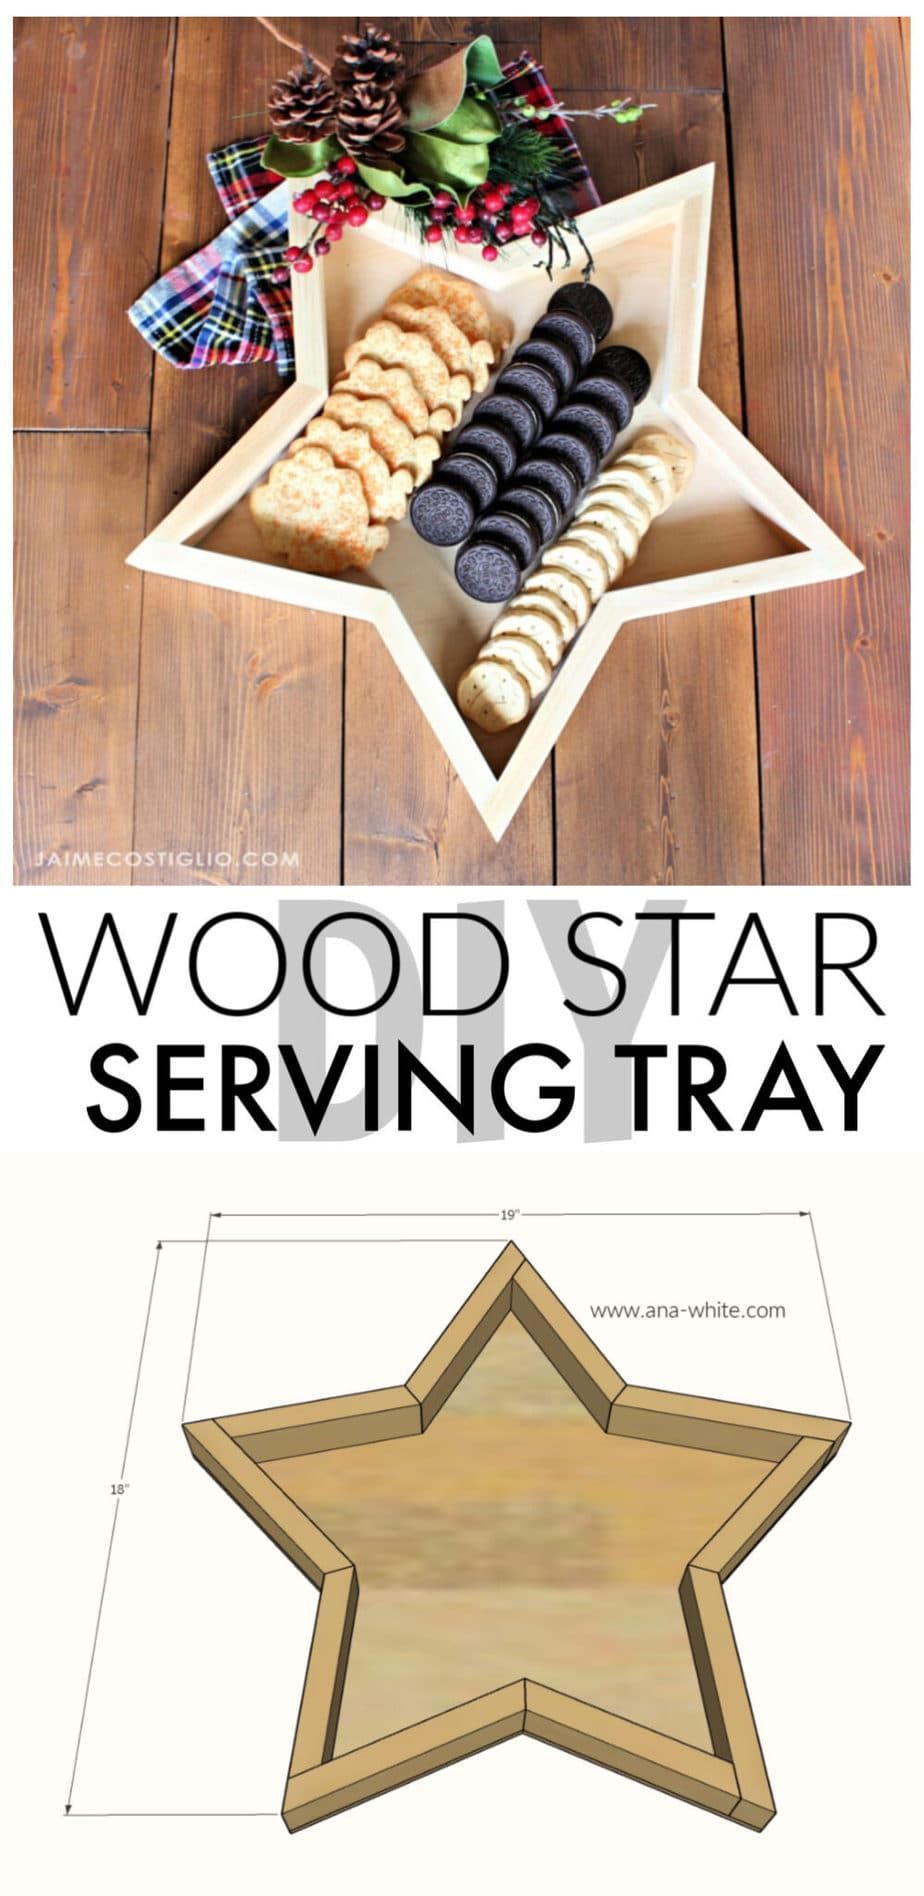 DIY Wood Star Tray - Jaime Costiglio - DIY Wood Star Tray - Jaime Costiglio -   19 diy Wood work ideas